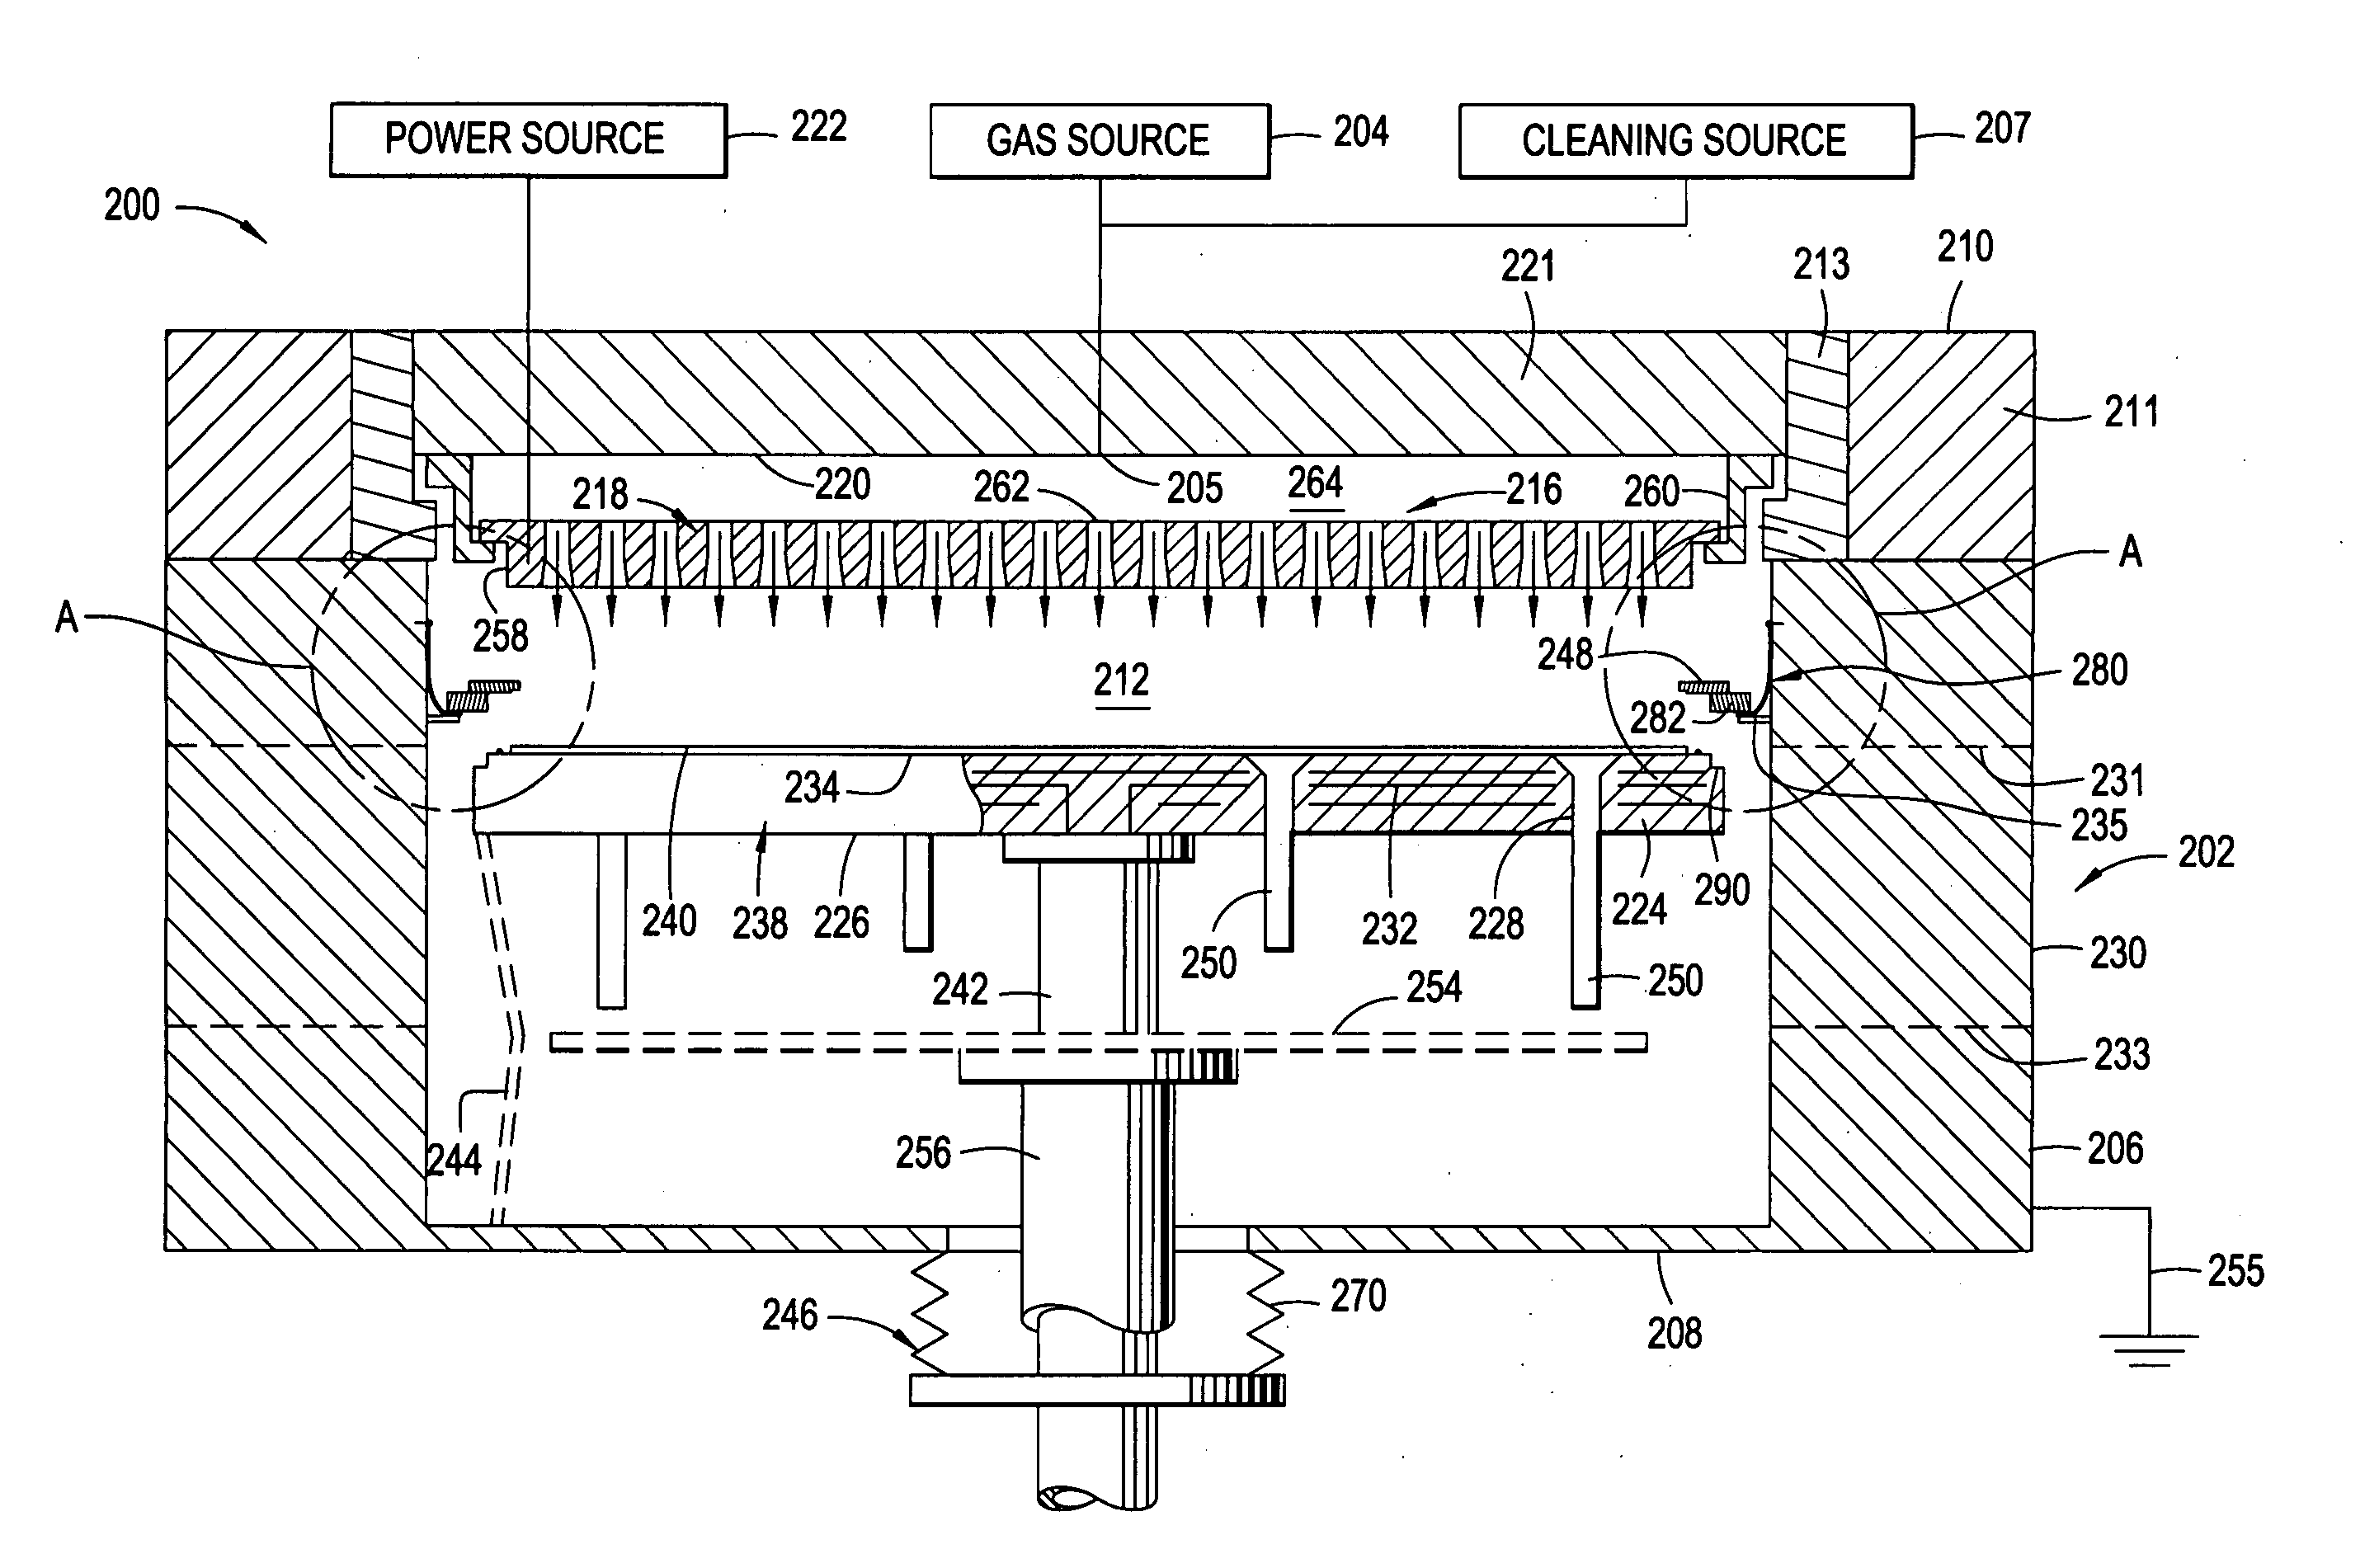 RF grounding of cathode in process chamber